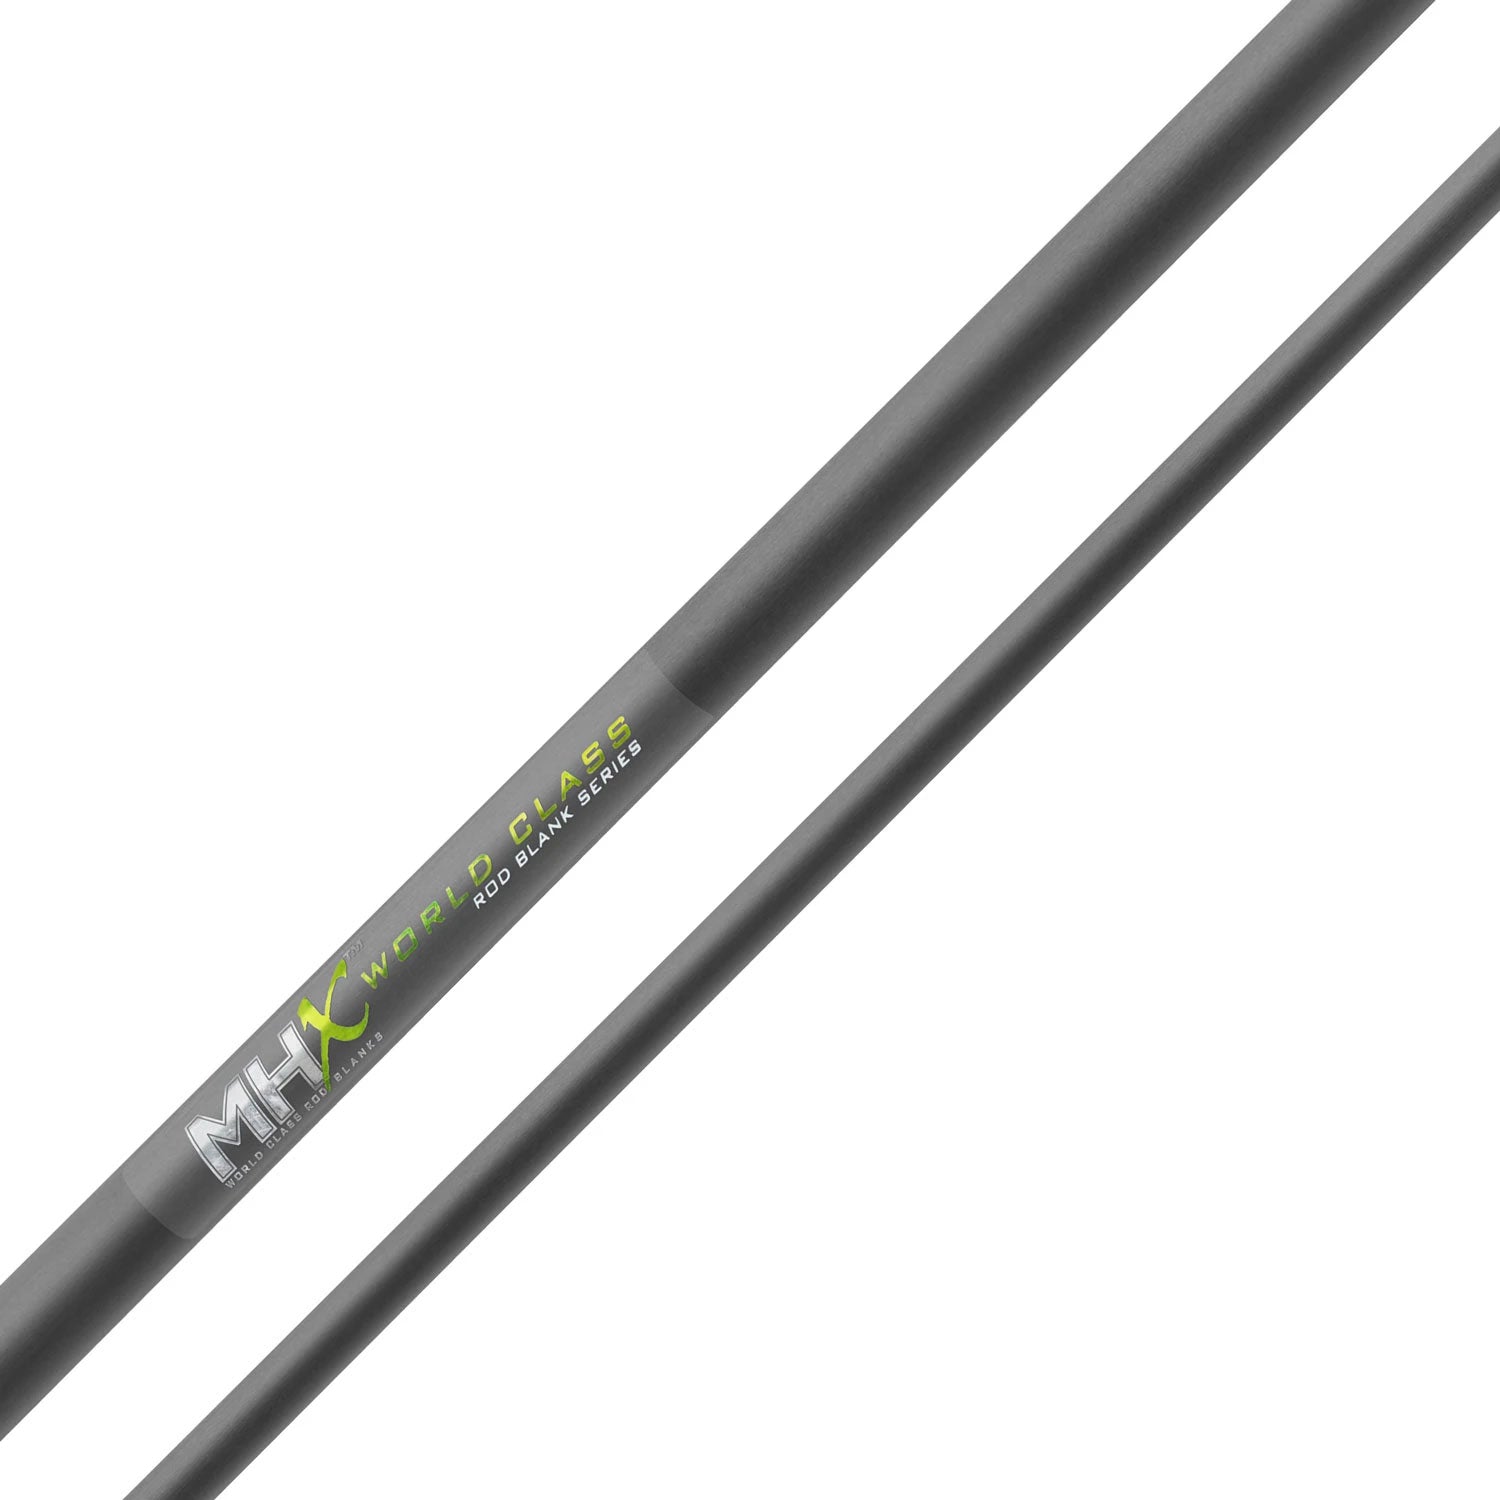 MHX 6'6" Ultralight Spinning Rod Blank - S781-2-MHX